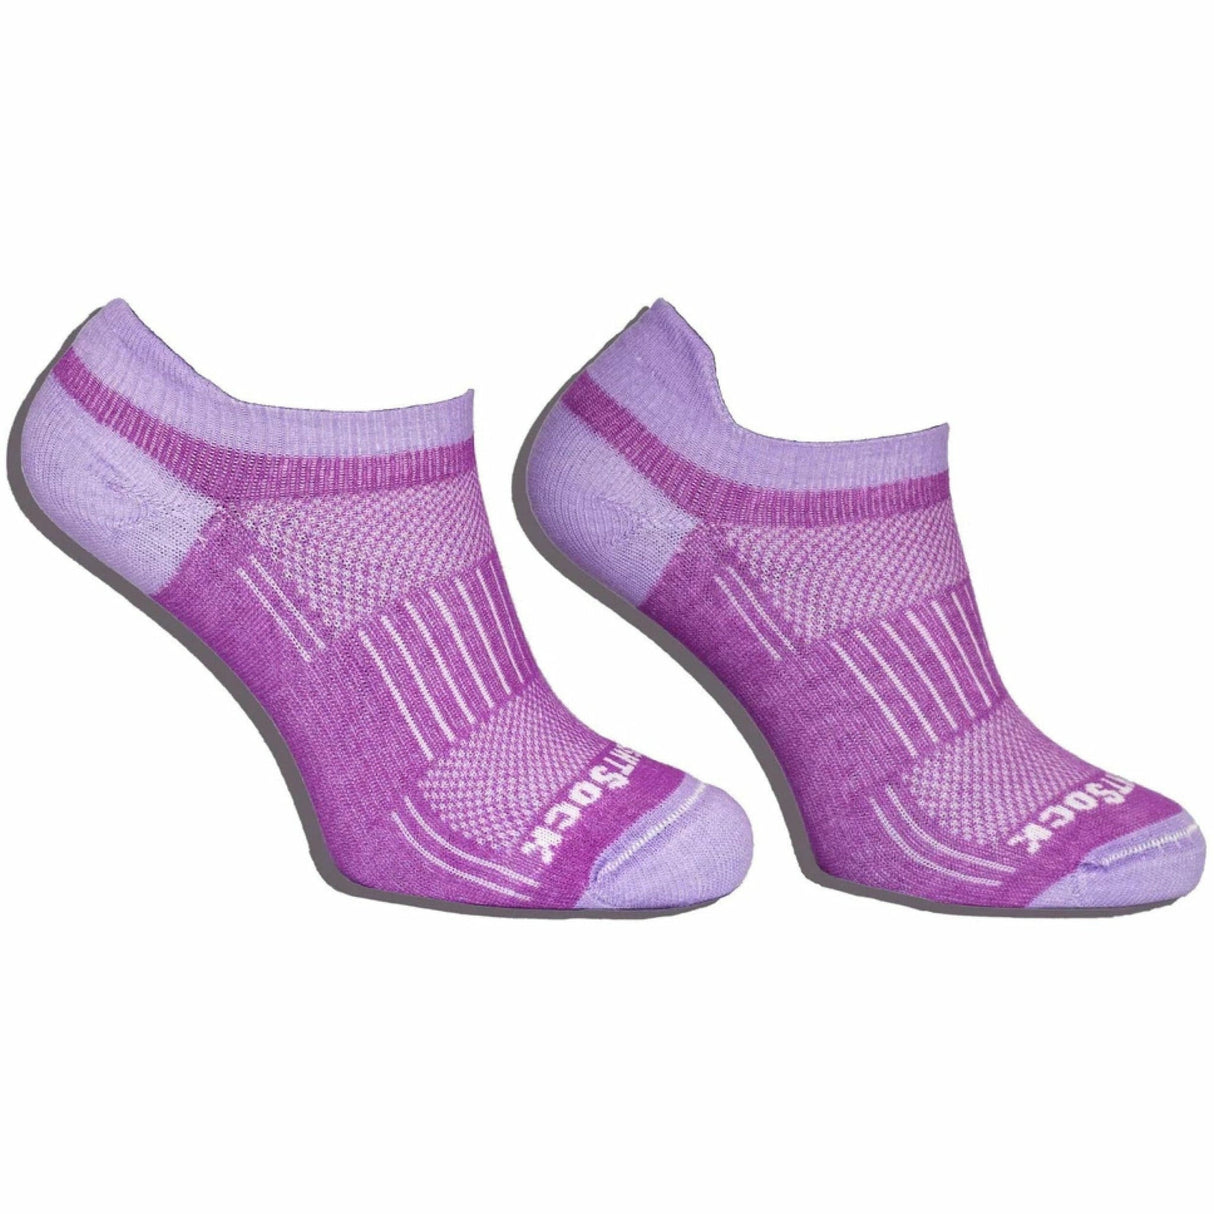 Wrightsock Double-Layer Coolmesh II Lightweight Tab Socks  -  Small / Purple/Lavender / Single Pair